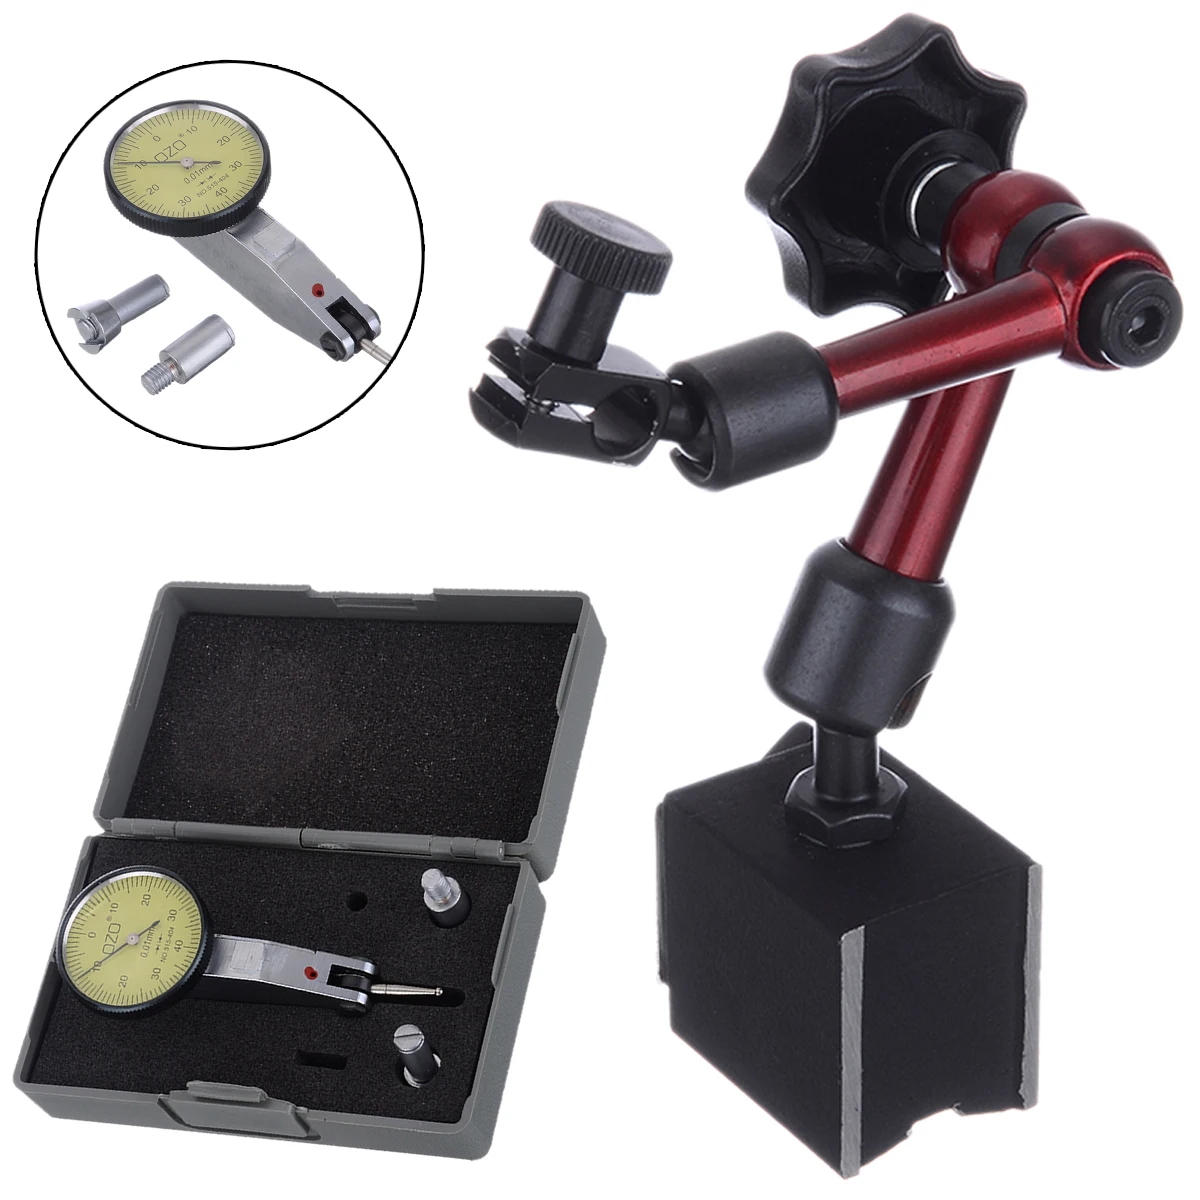 Adjustable Magnetic Base Holder with Digital Dial Indicator 0-0.8mm Red